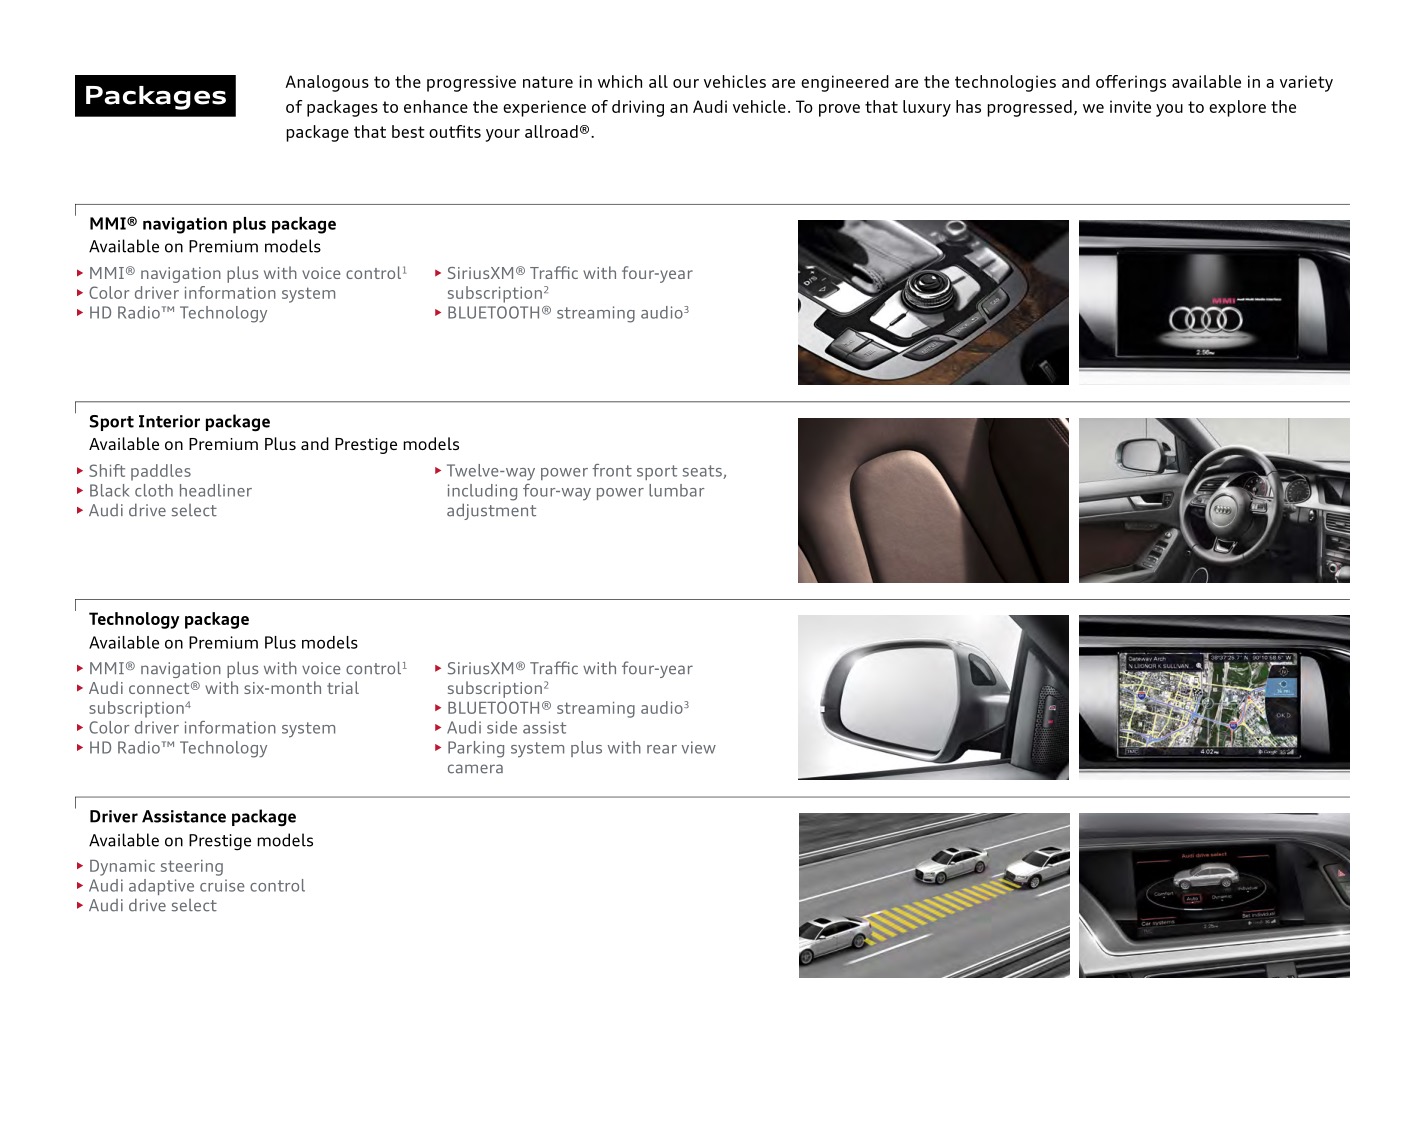 2015 Audi Allroad Brochure Page 18